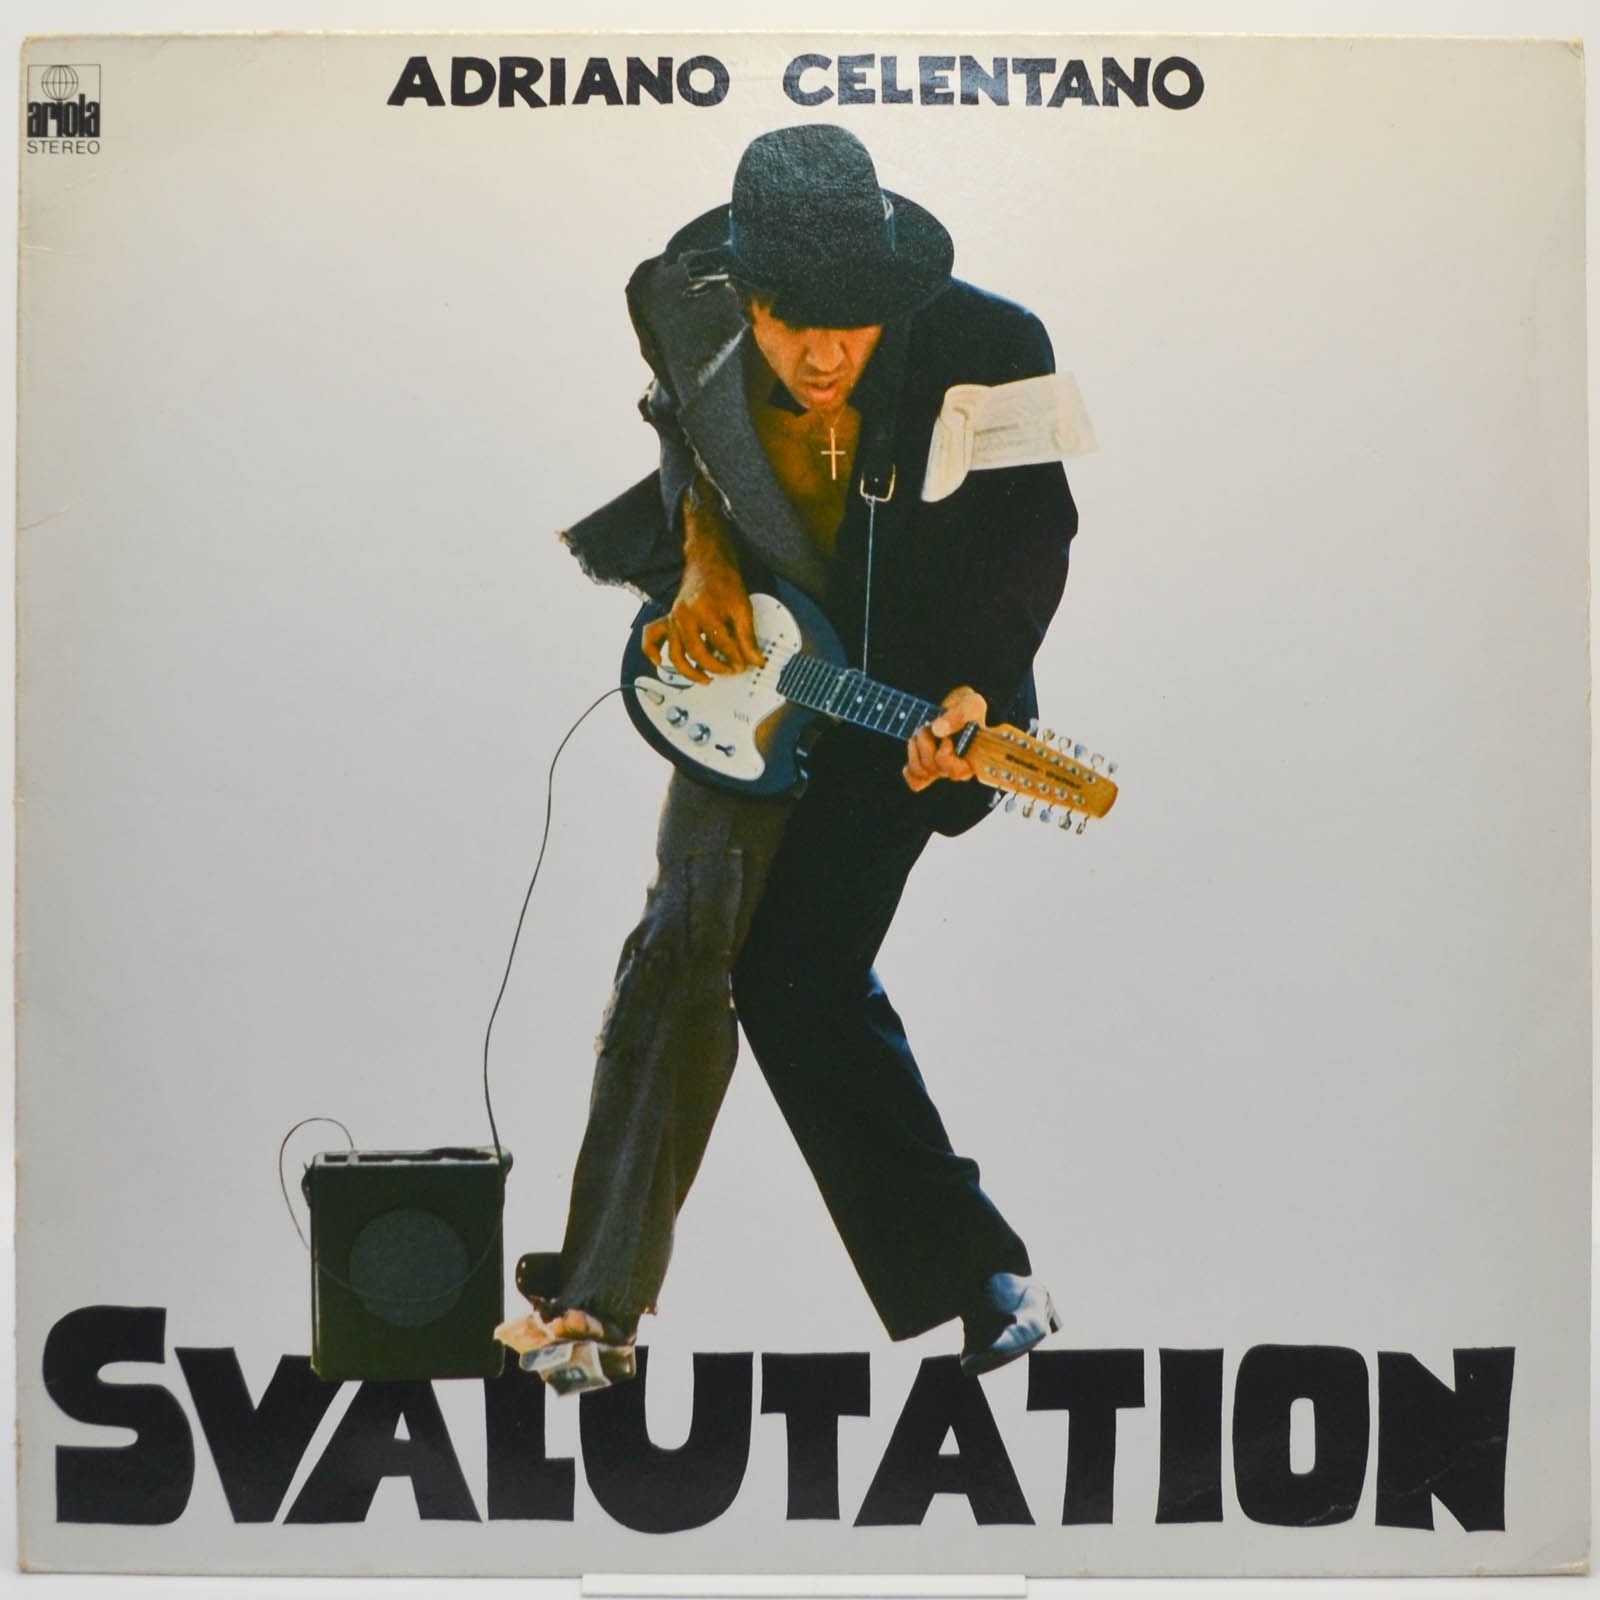 Adriano Celentano — Svalutation, 1976